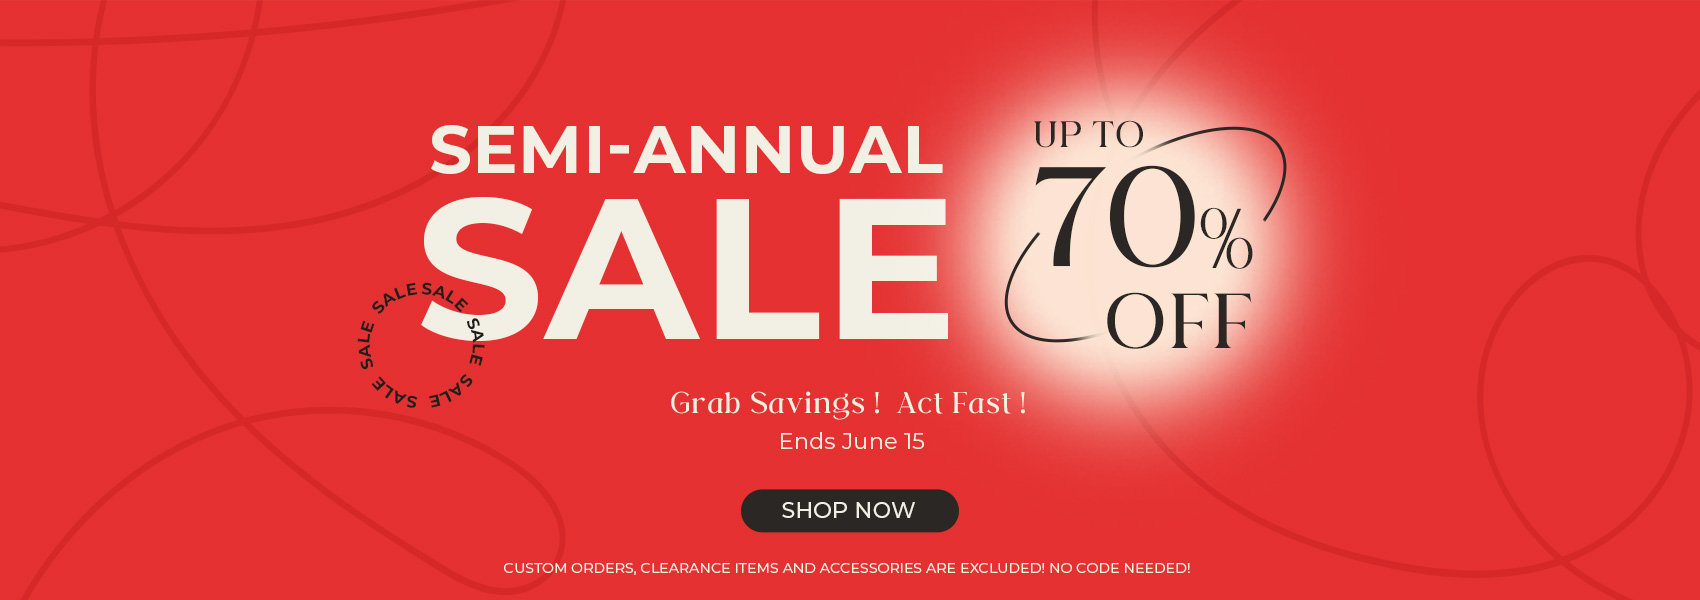 Unlock Stunning Savings: UniWigs' Semi-Annual Sale with Up to 70% Off!